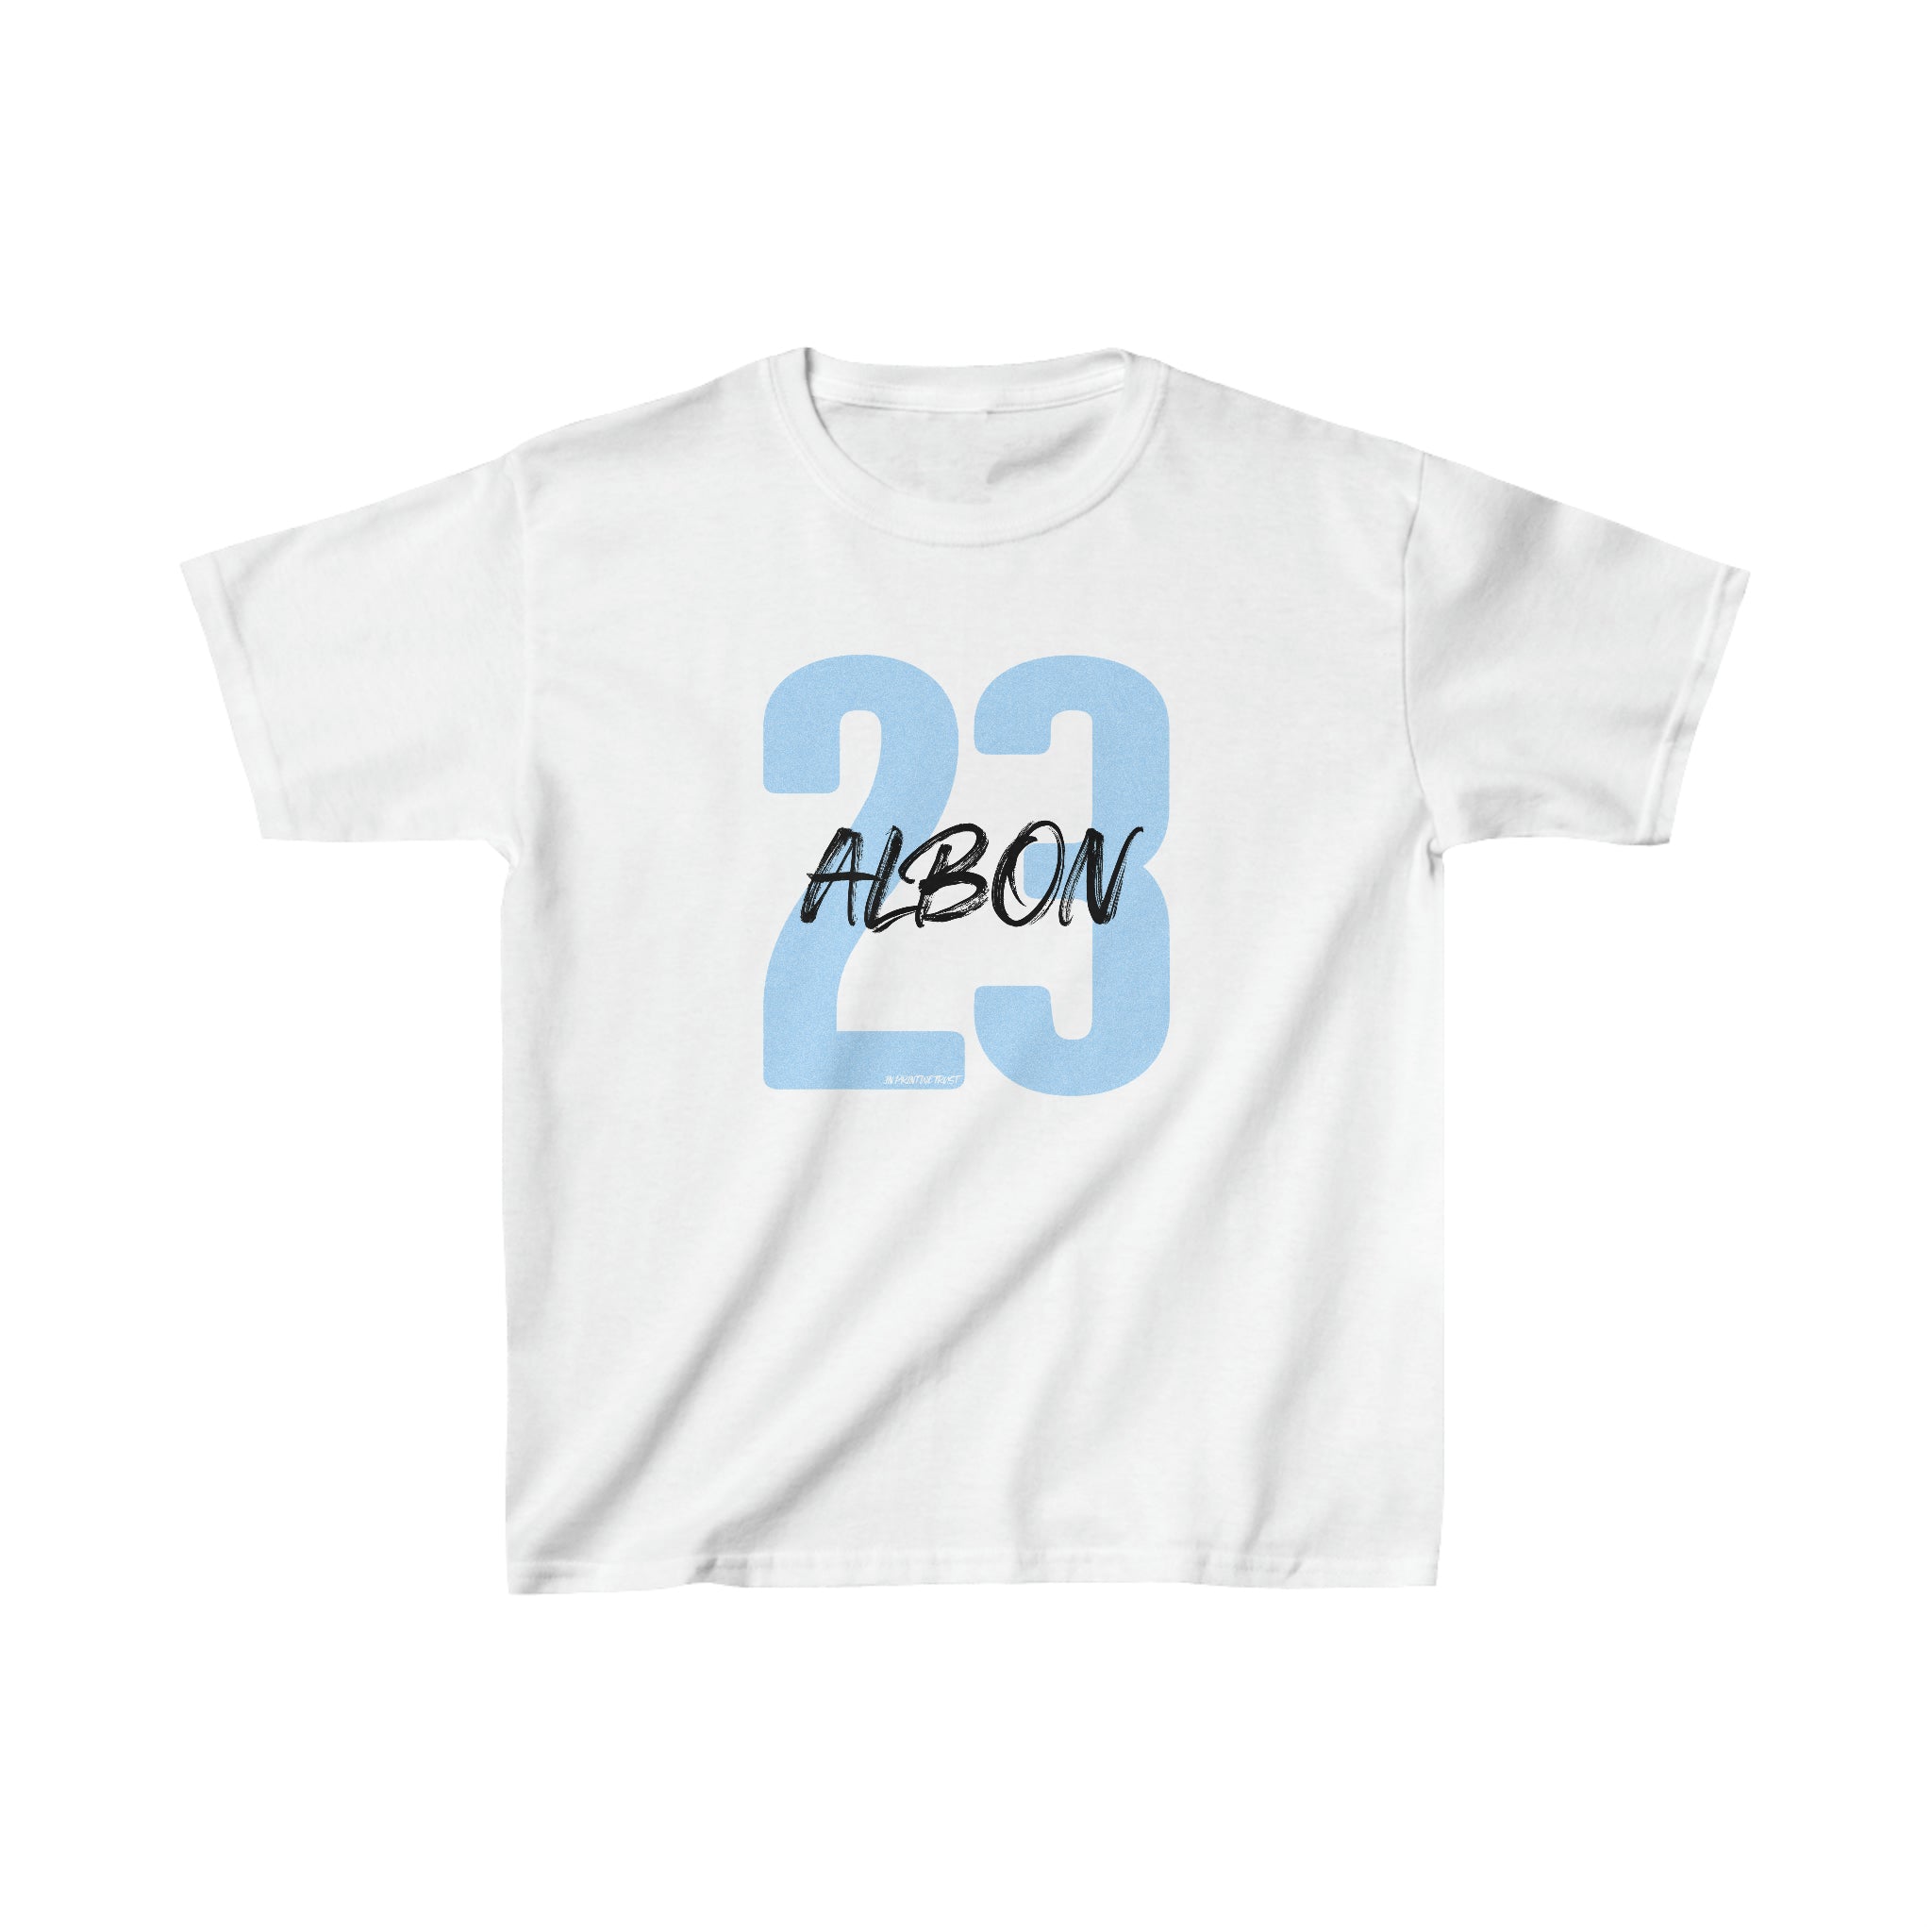 'Albon 23' baby tee - In Print We Trust